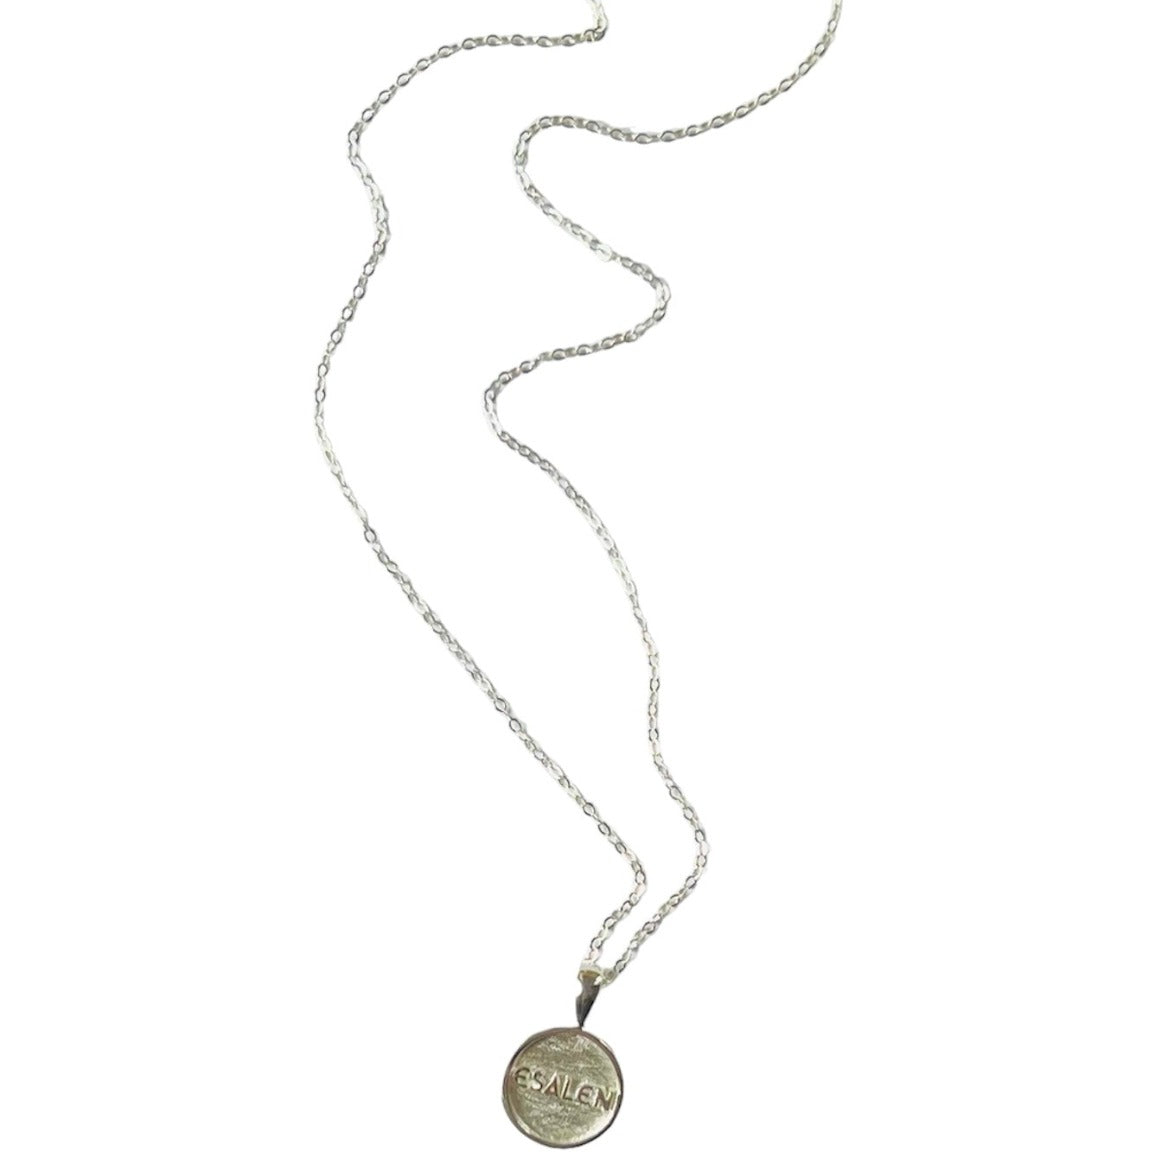 Esalen Charm Necklace in Silver